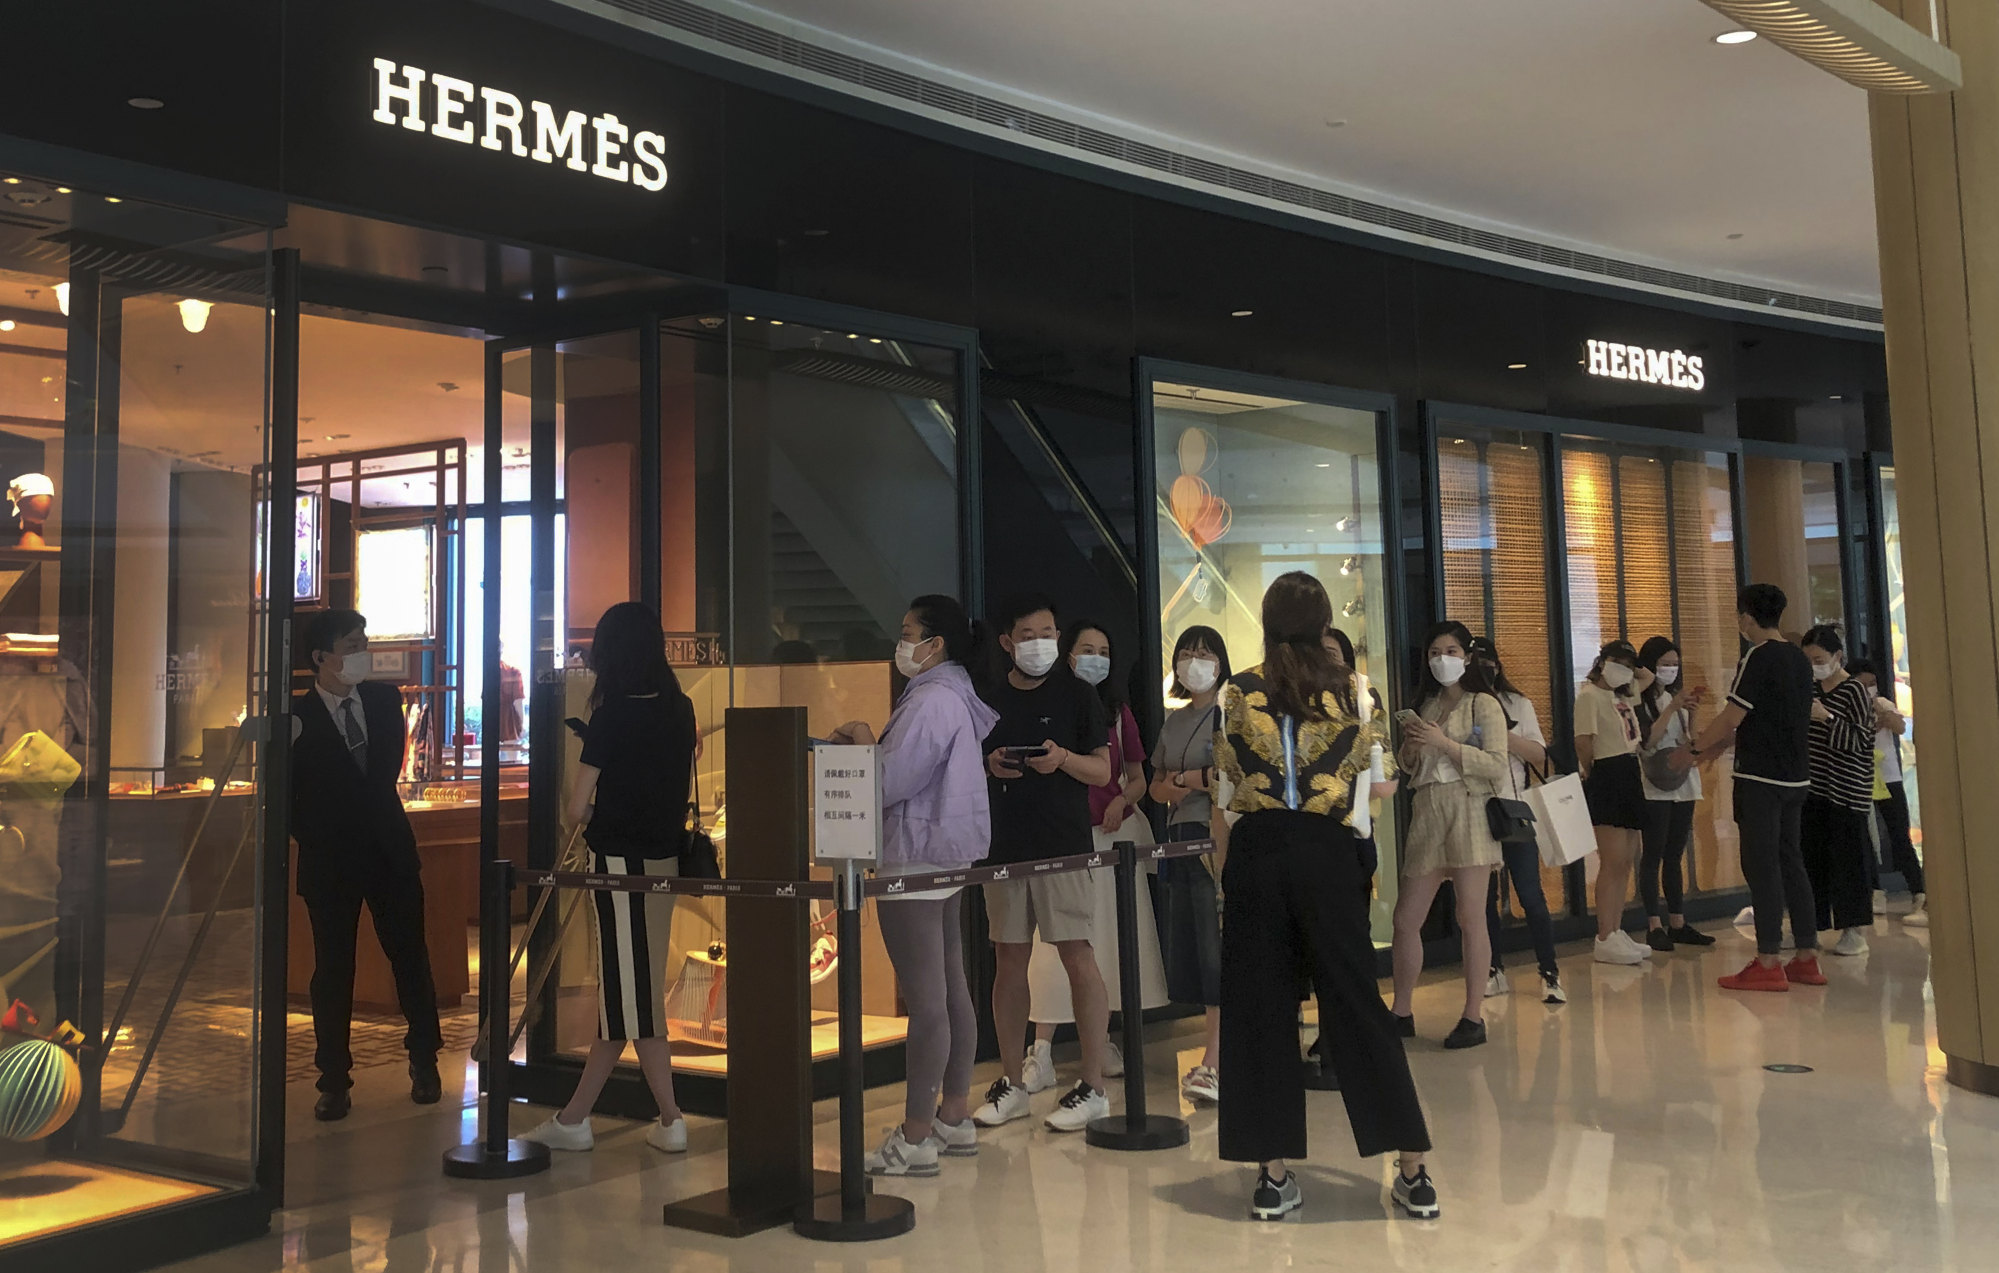 Luxury brand Hermès plans new factories as handbag demand soars